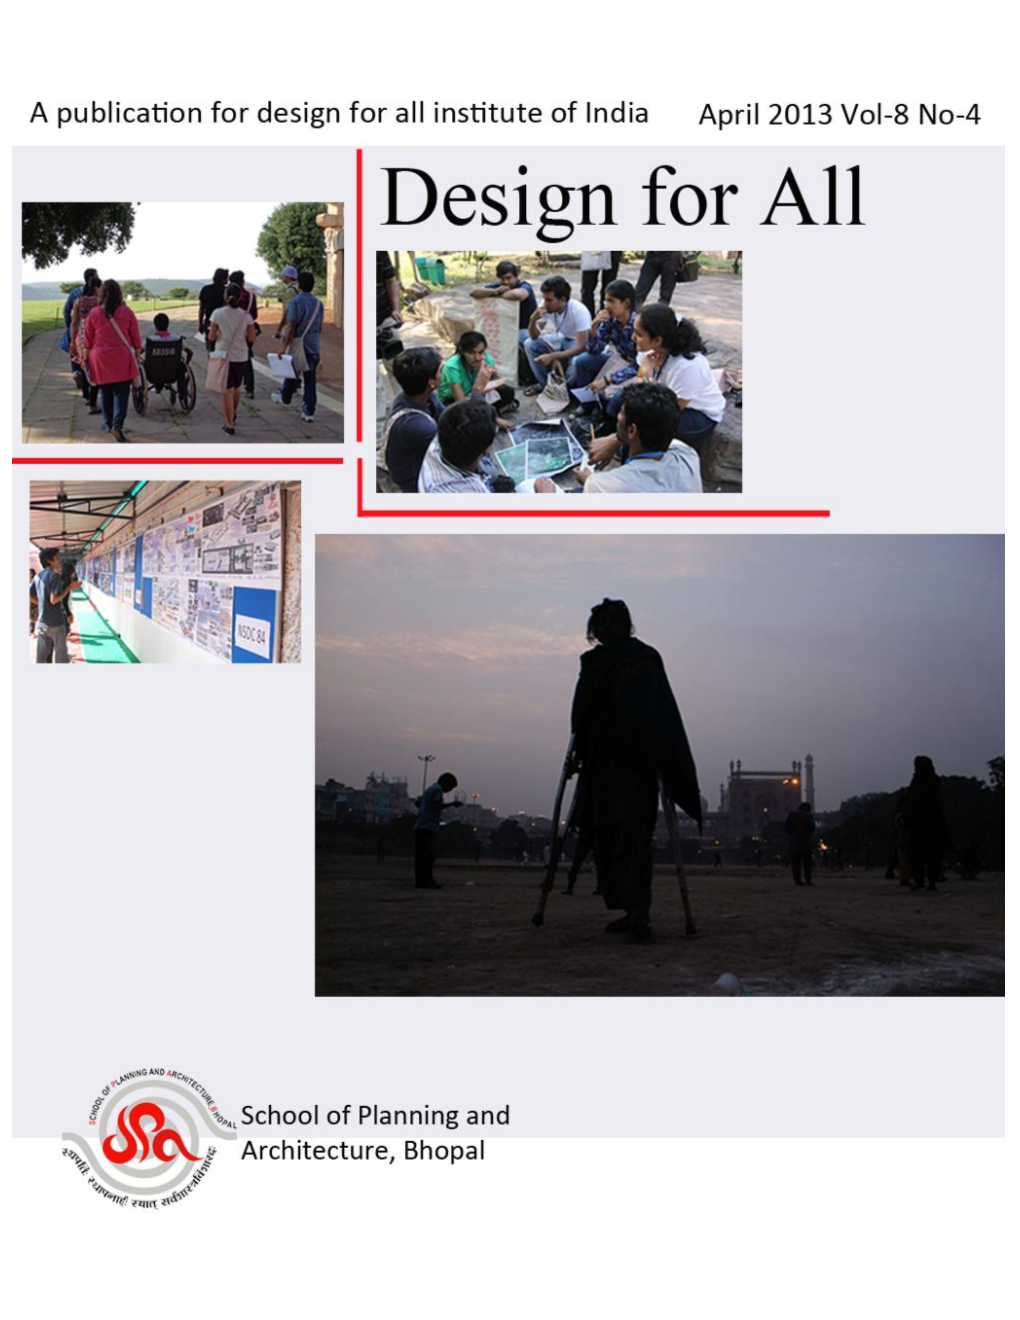 1 April 2013 Vol-8 No-4 Design for All Institute of India